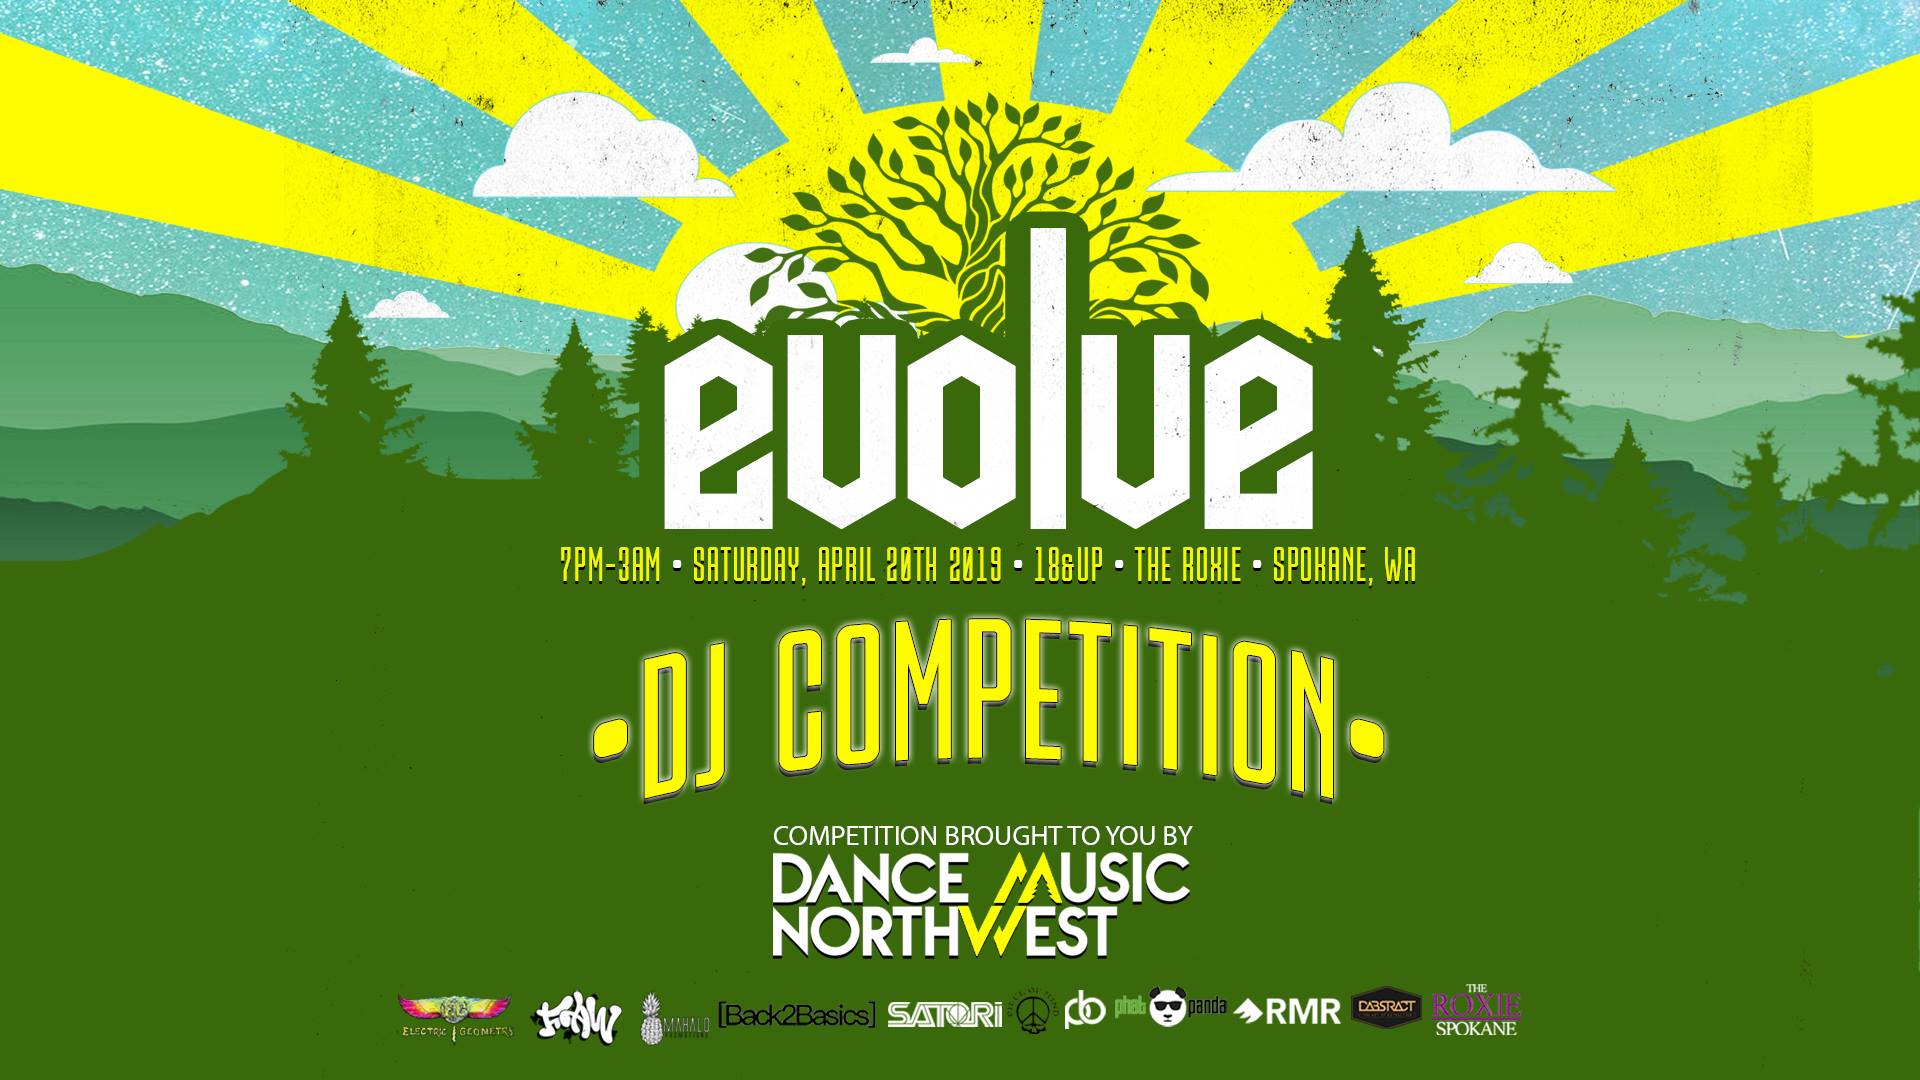 Evolve DJ Contest Artwork